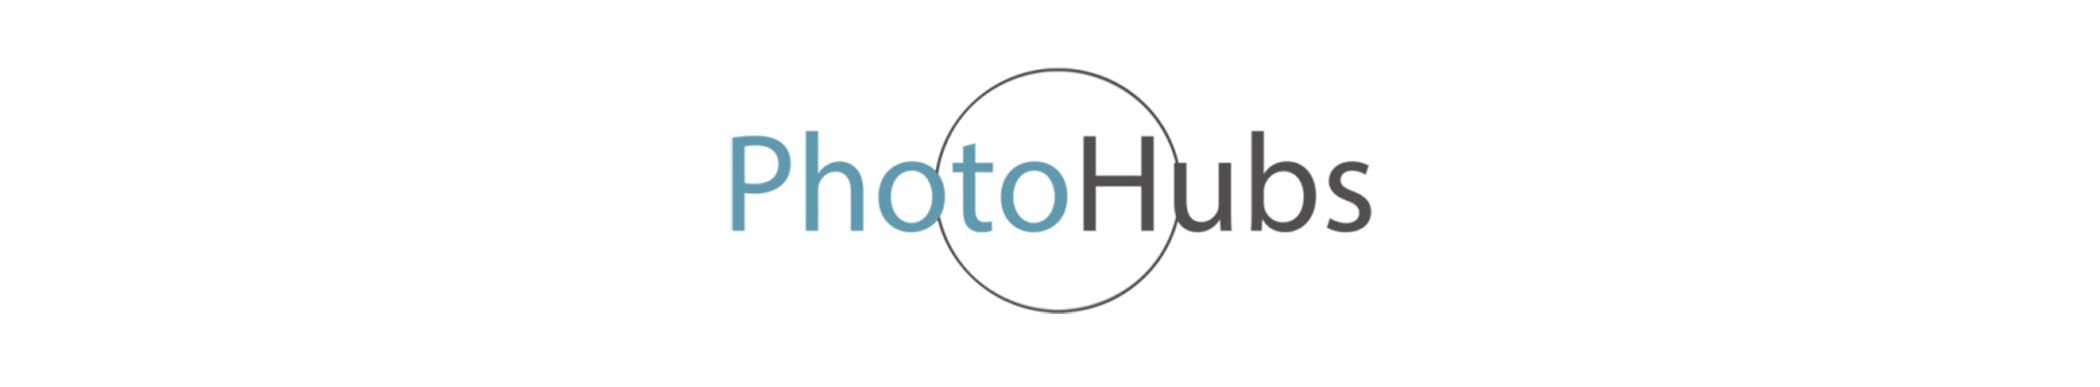 PhotoHubs Event